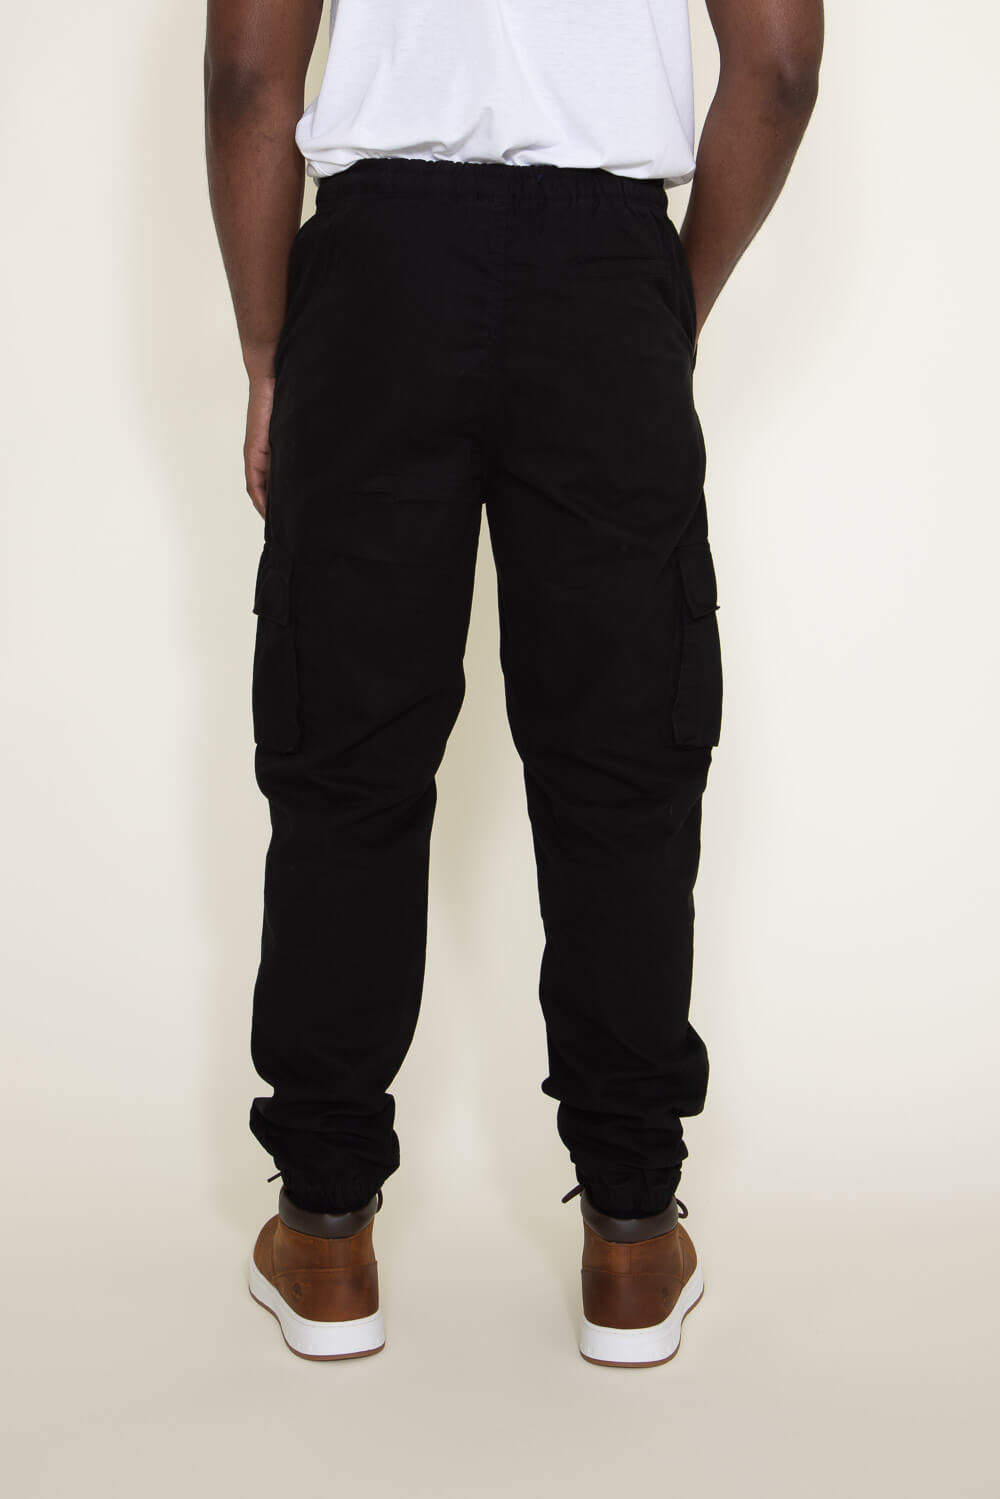 Uni Clau Mens Fashion Cargo Pants Athletic Joggers Pants Chino Trousers  Sweatpants Black Small